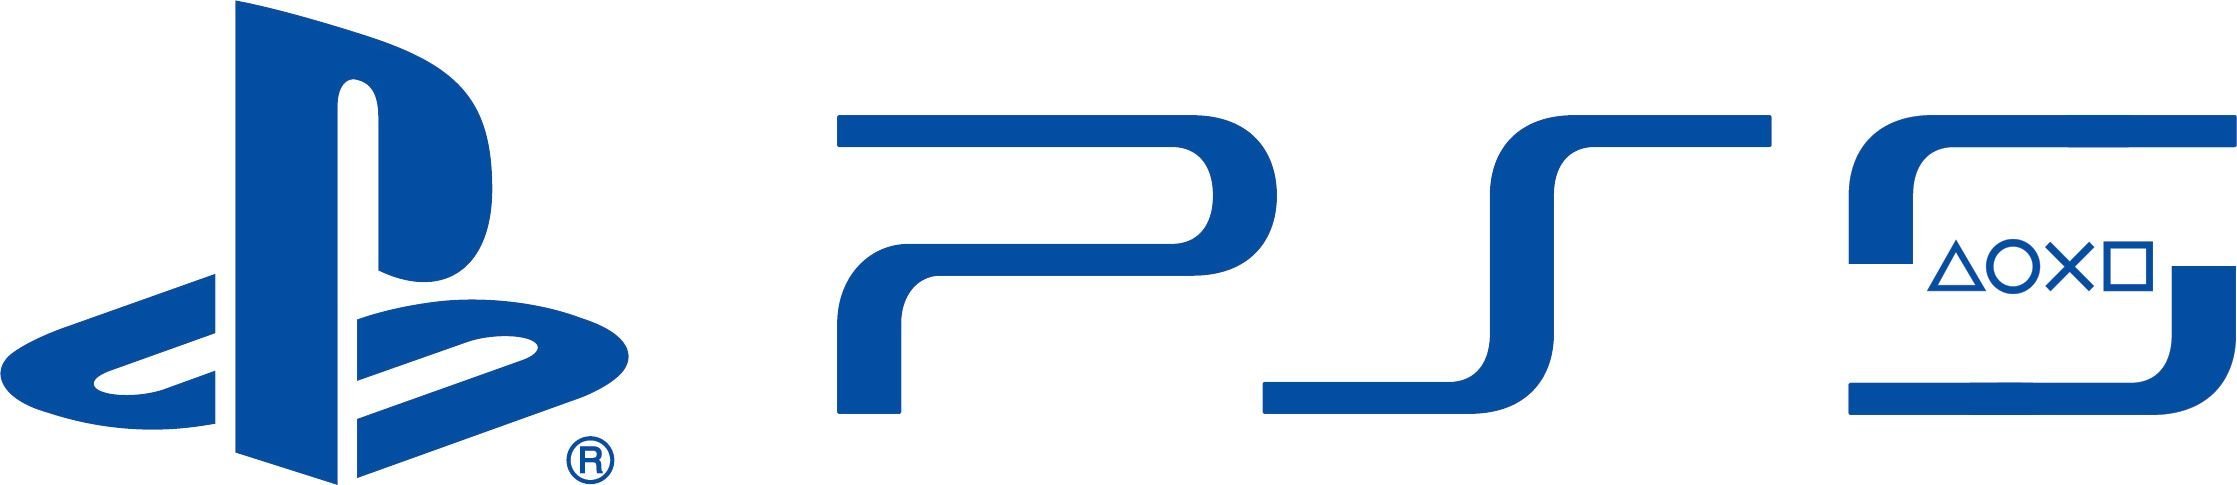 Пс логотип прозрачный фон фото